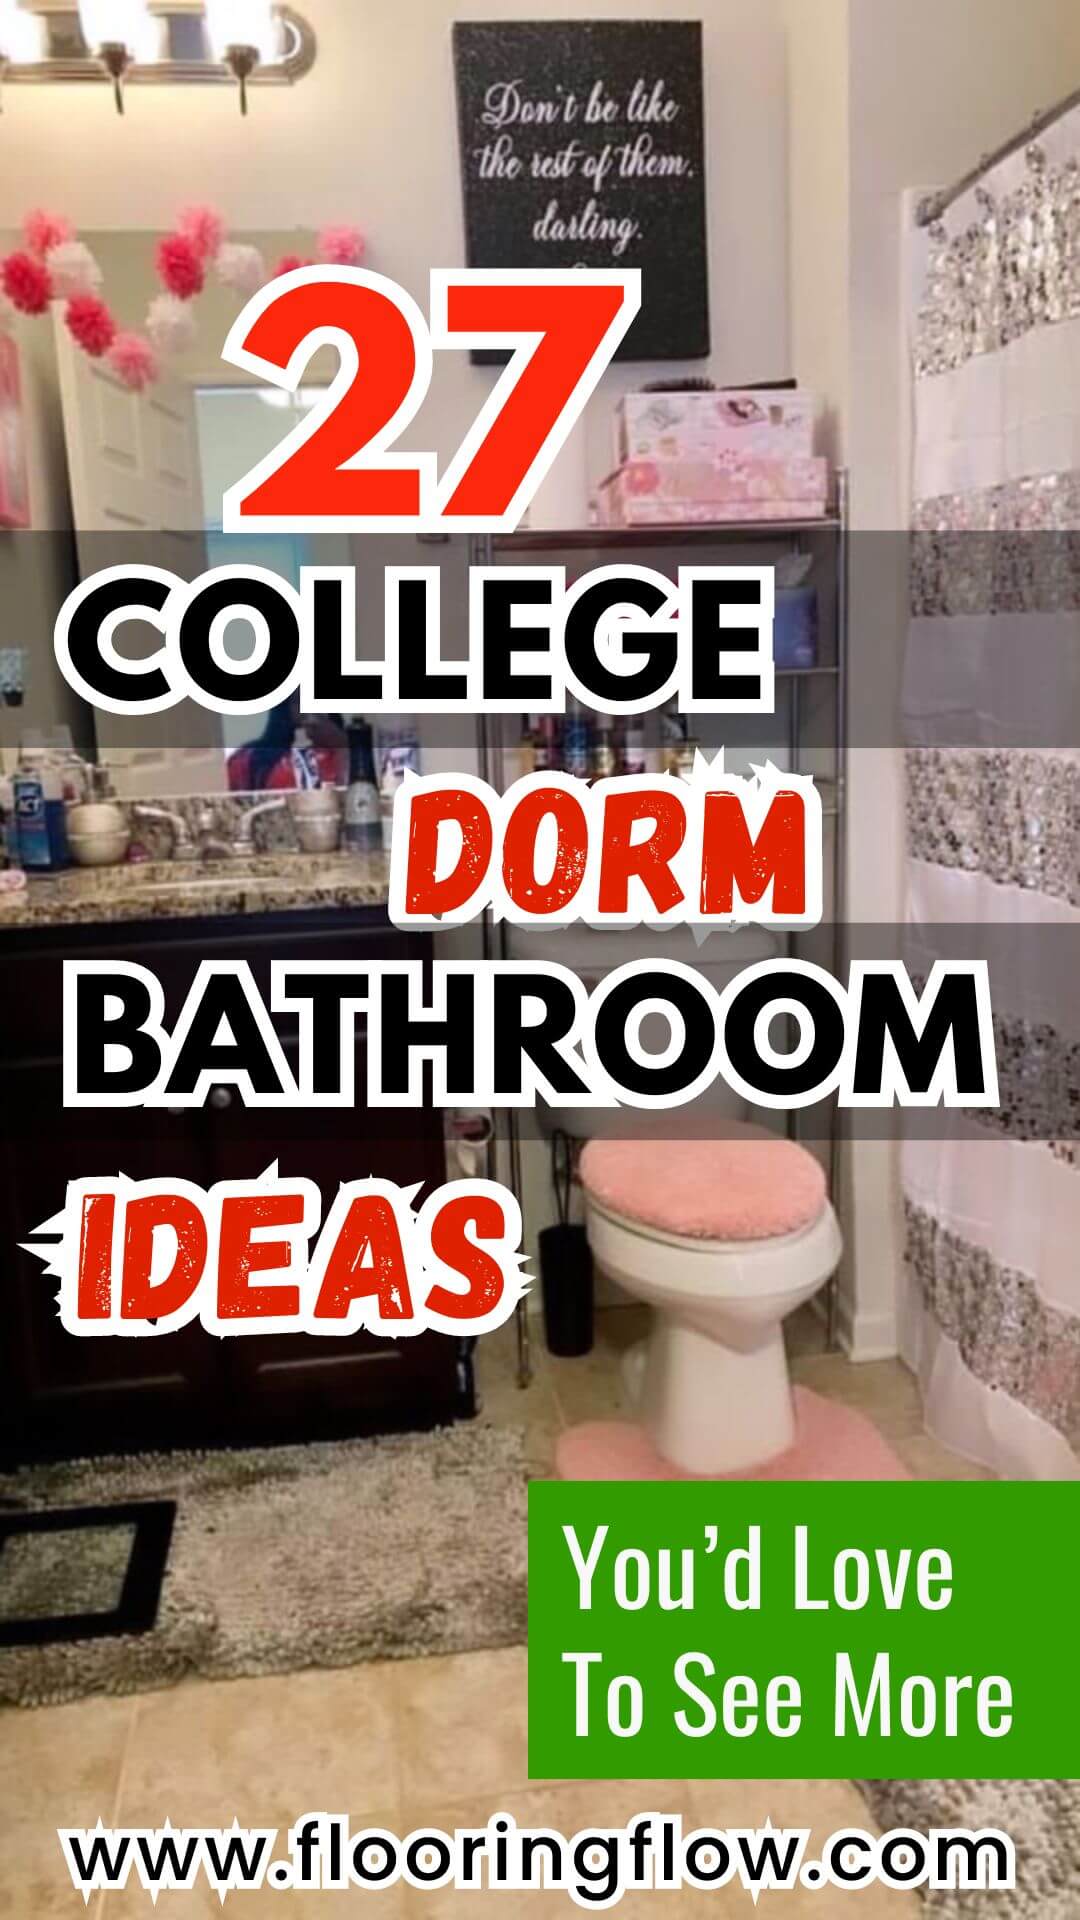 College Dorm Bathroom Ideas